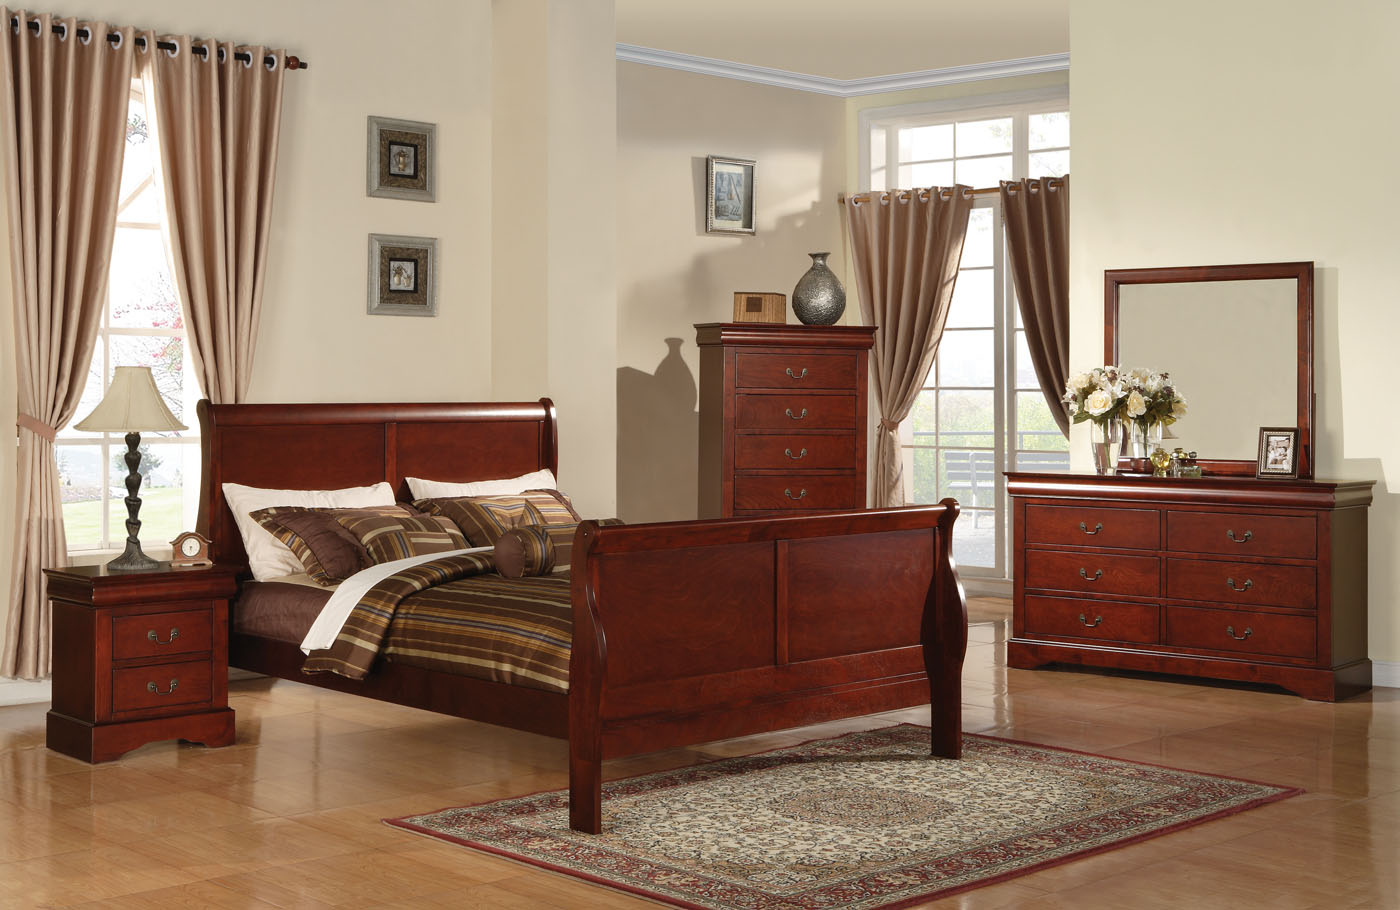 bing images cherry bedroom furniture set